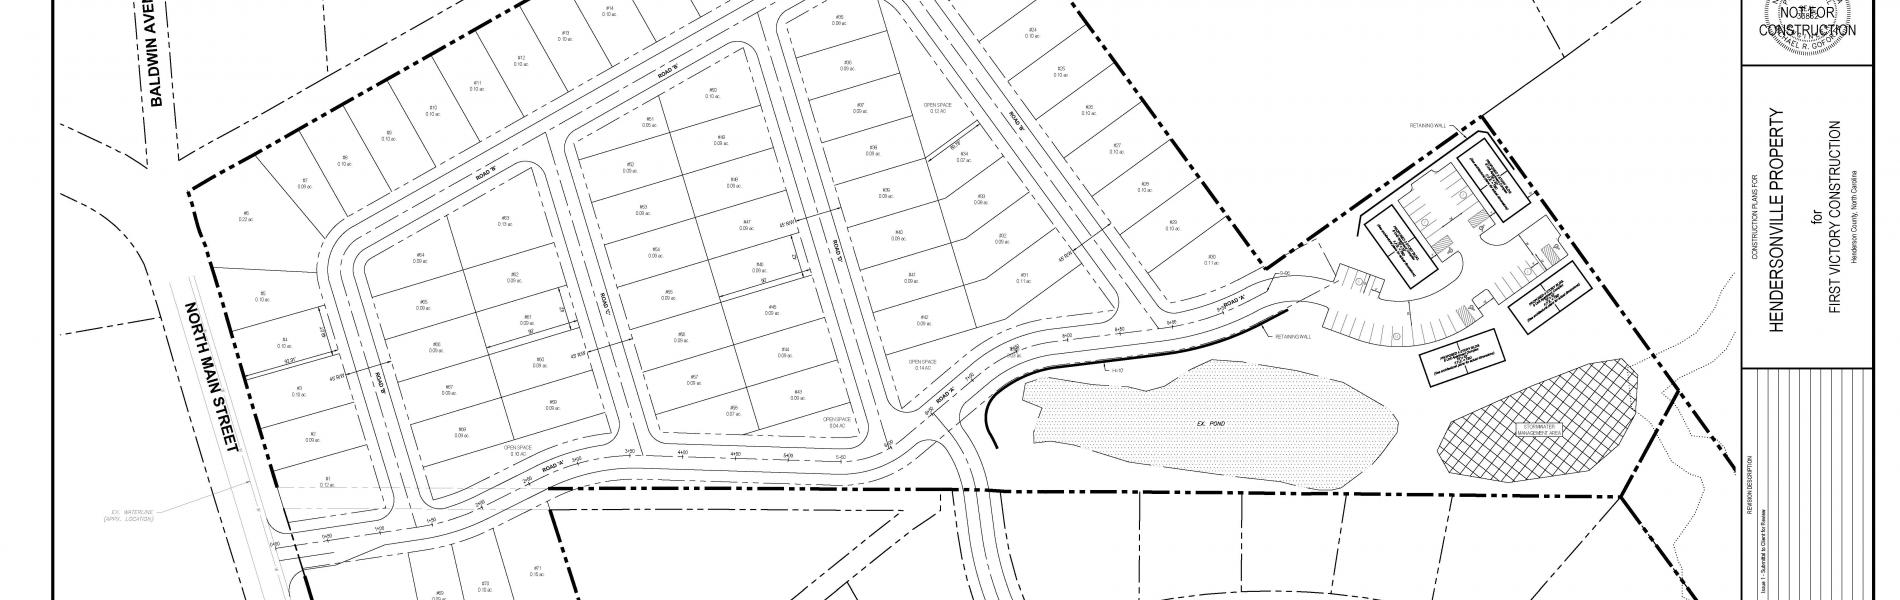 Providence Walk Preliminary Site Plan